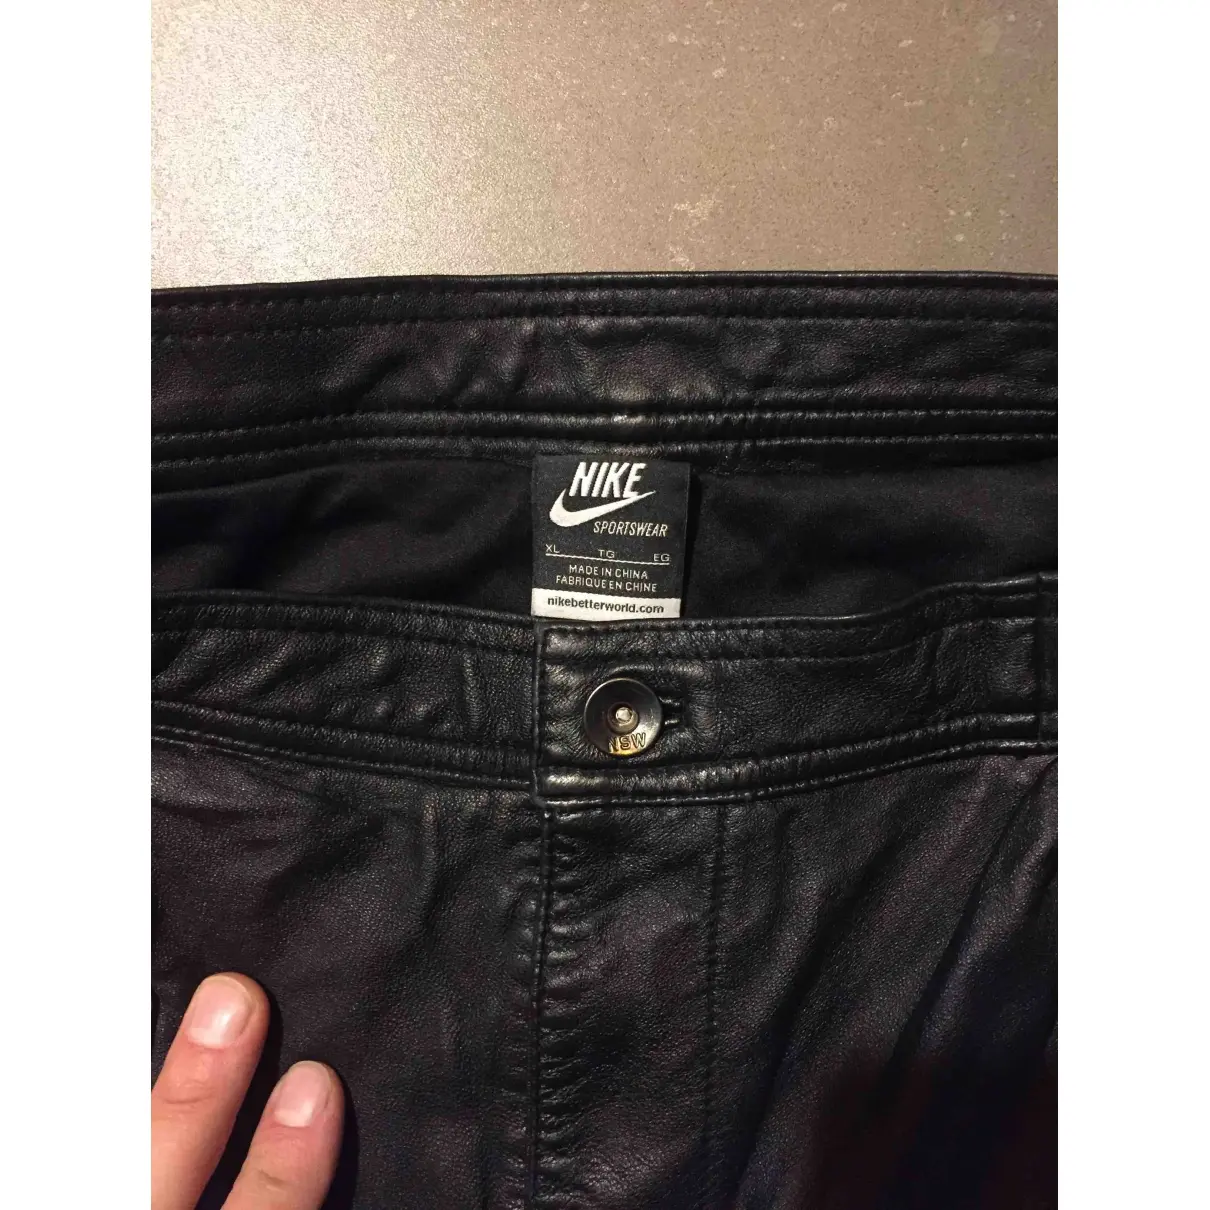 Nike Leather mini short for sale